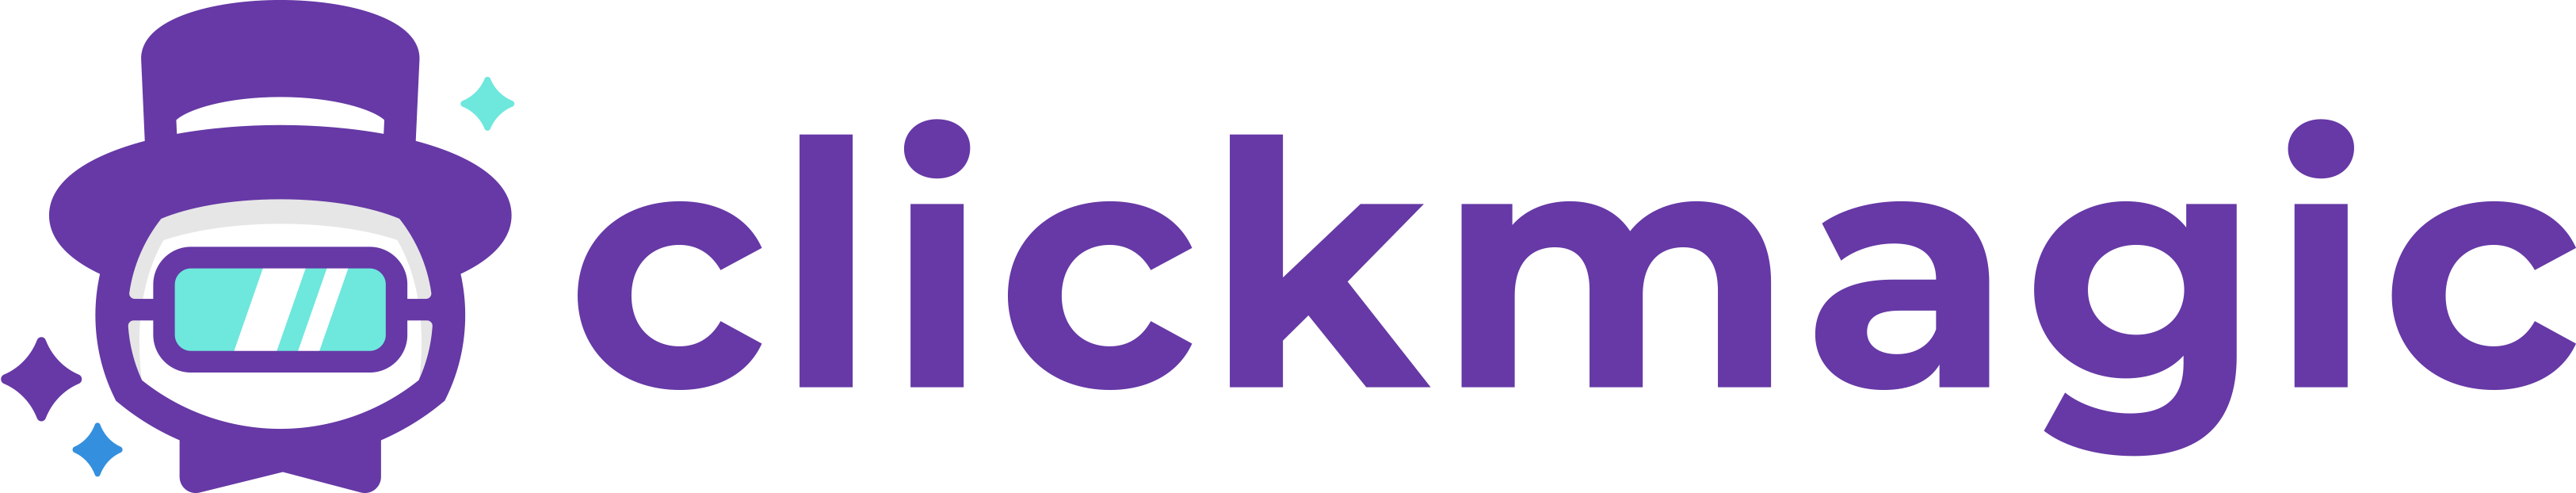 ClickMagic Logo main